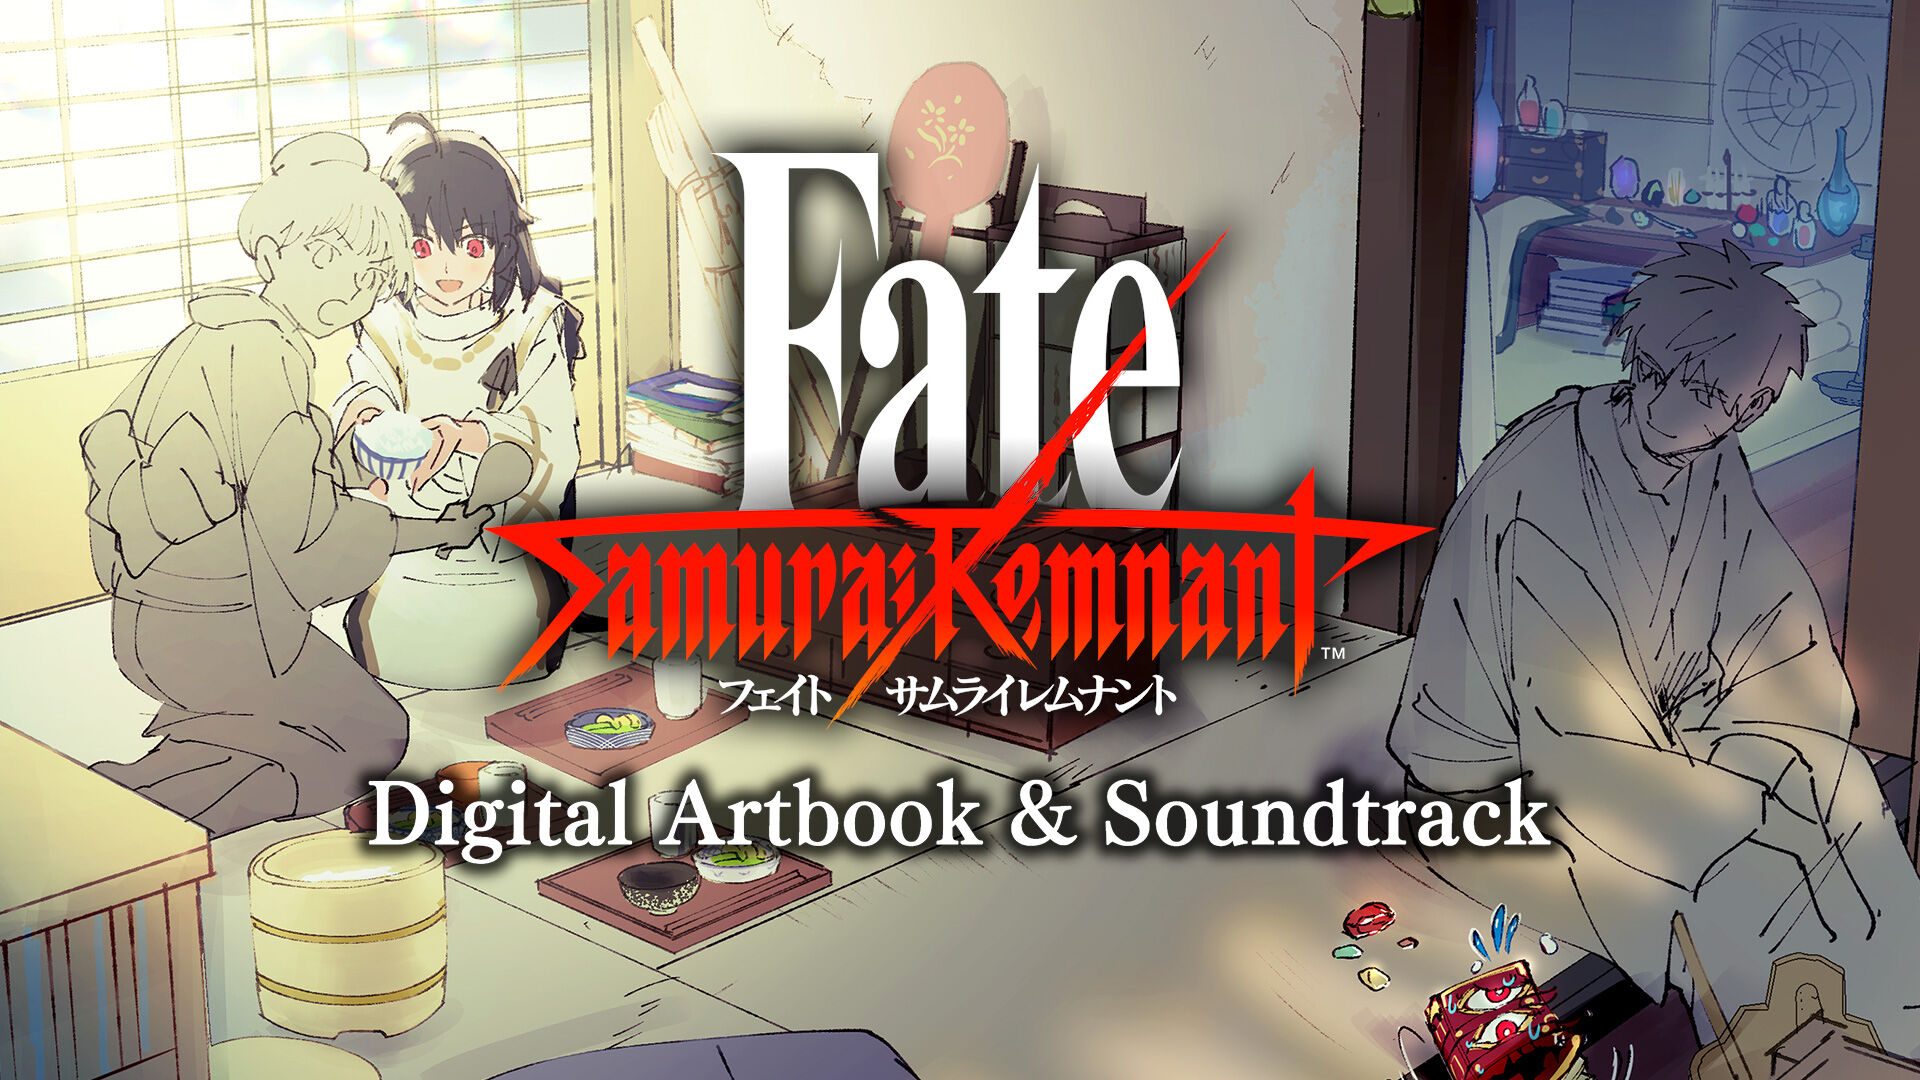 Fate/Samurai Remnant Digital Deluxe Edition ダウンロード版 | My 